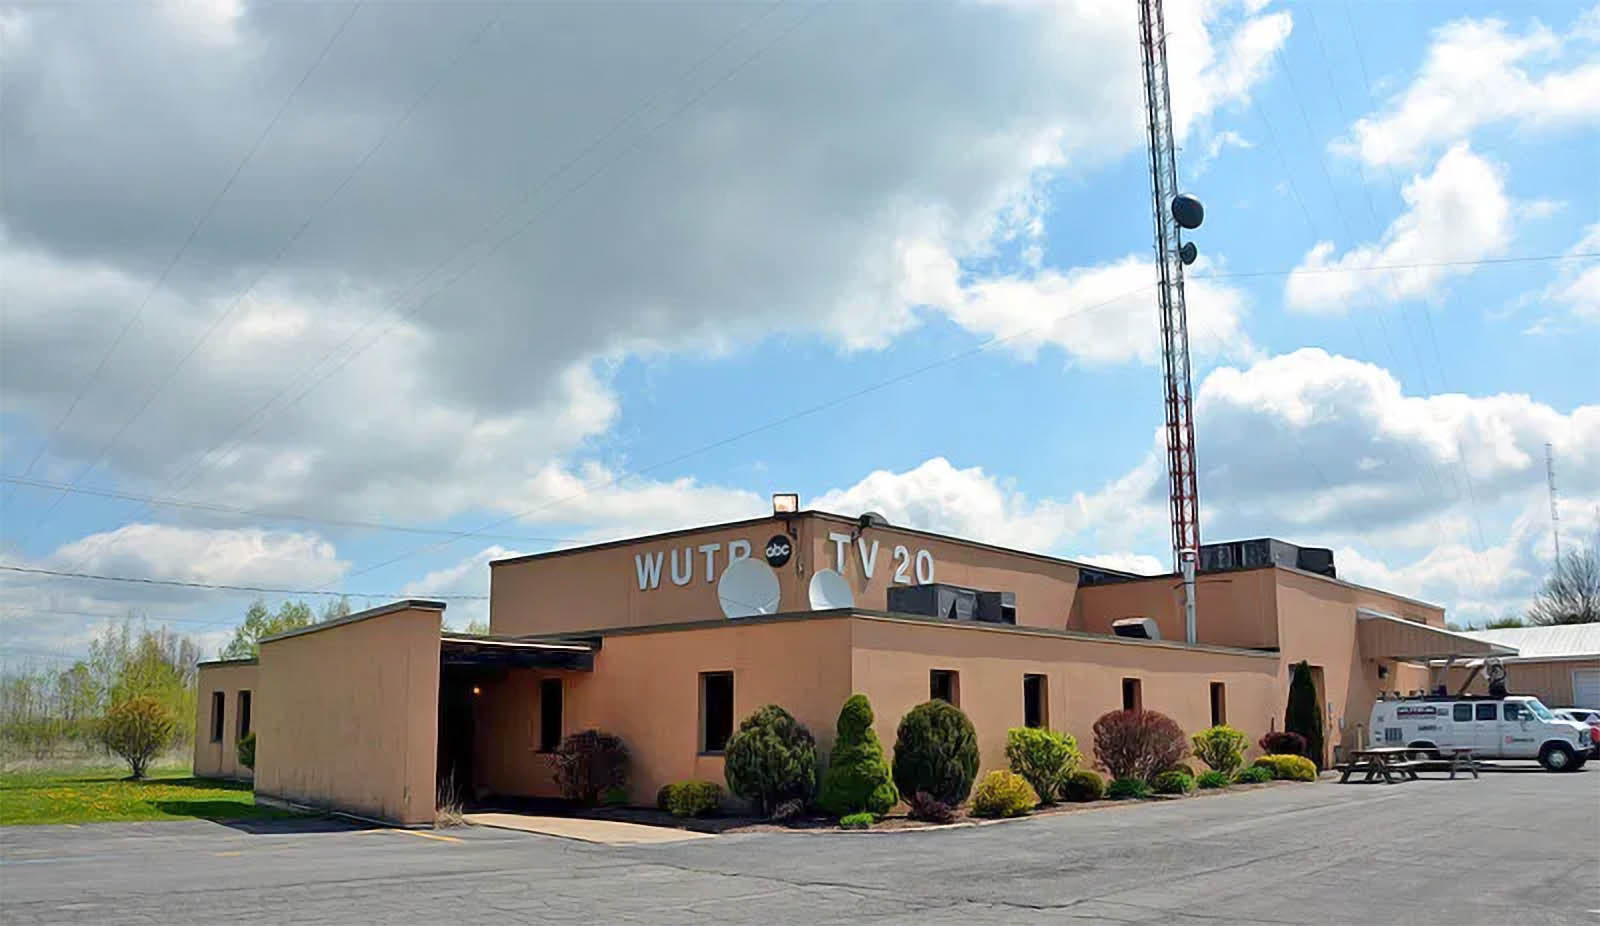 WUTR News studio building